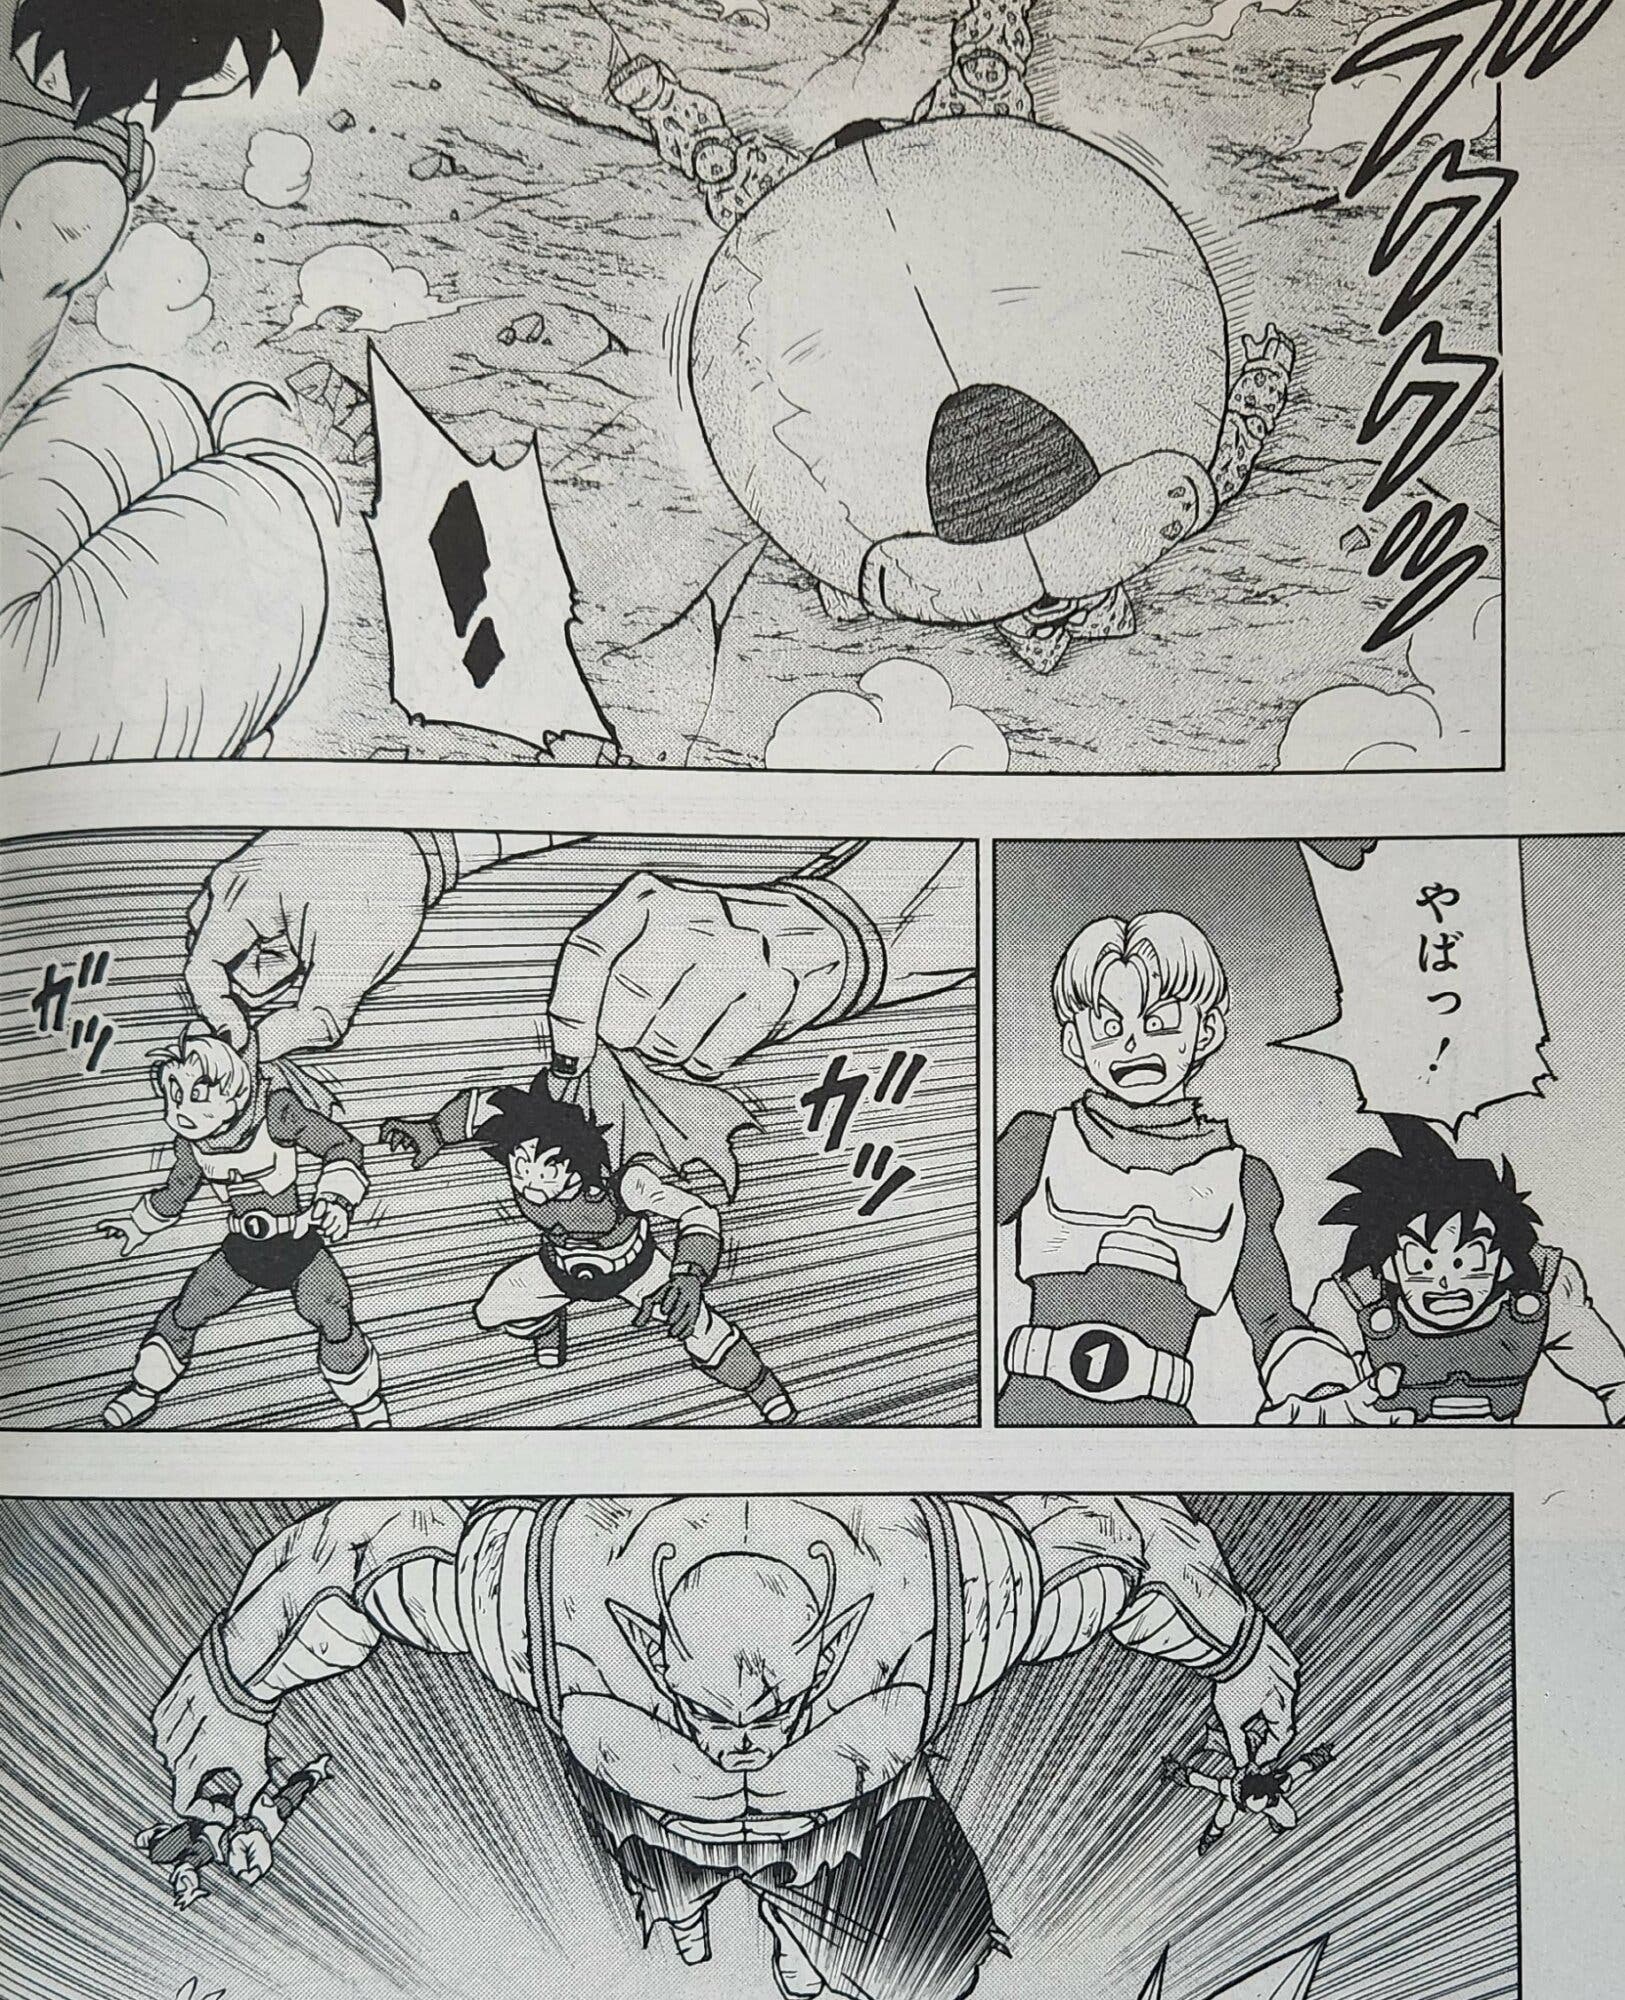 Manga de Dragon Ball Super emociona con su increíble capítulo 100